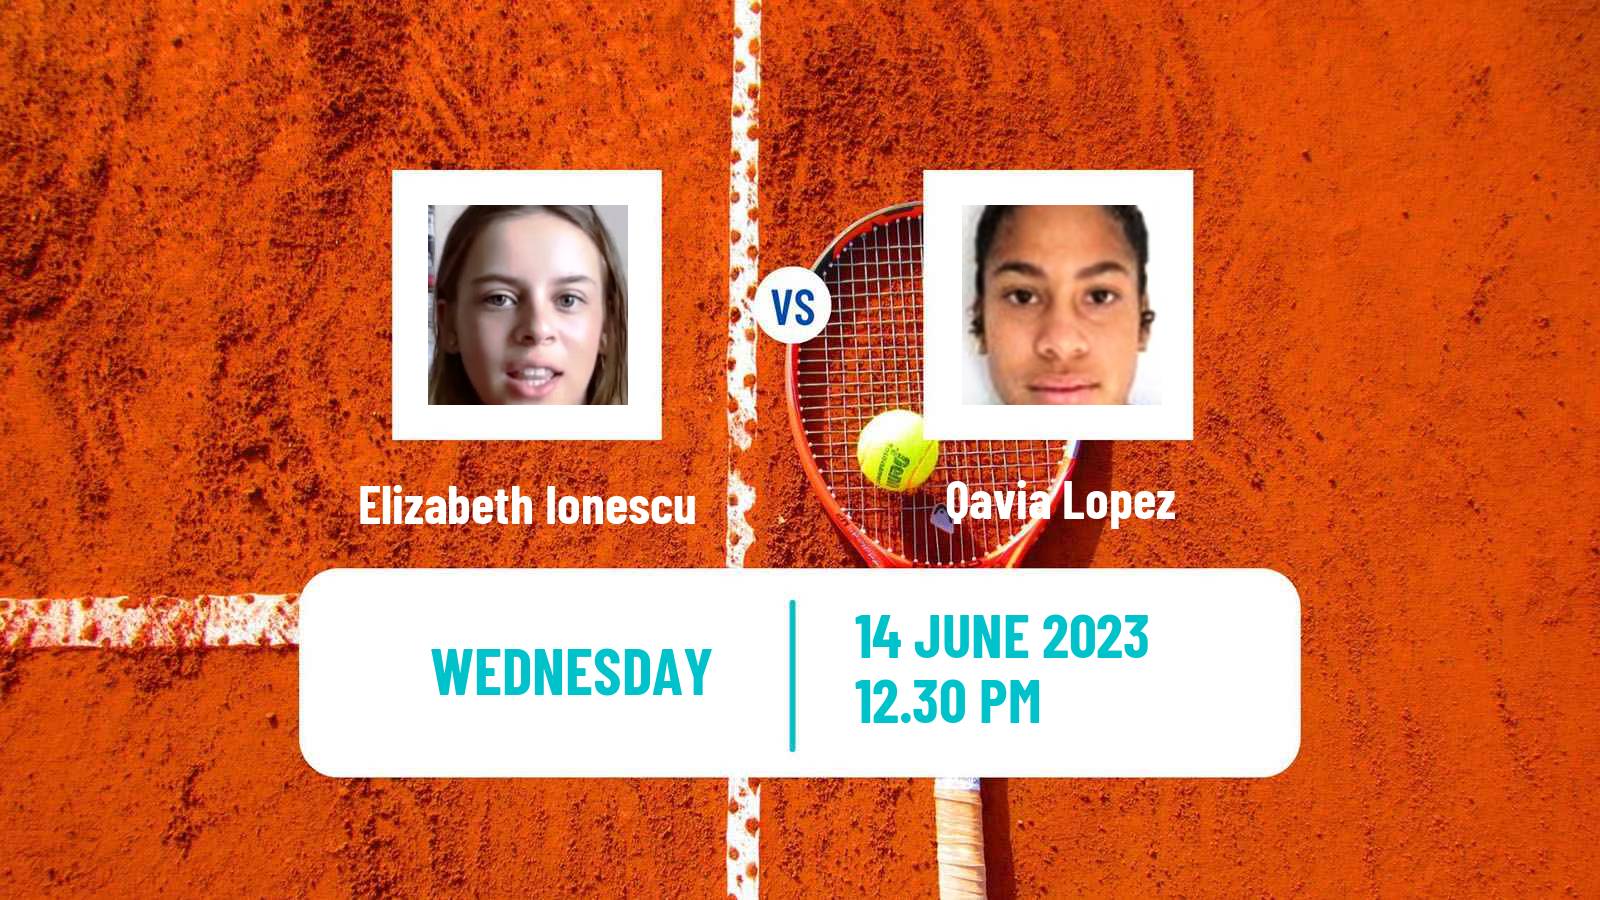 Tennis ITF W25 Colorado Springs Women Elizabeth Ionescu - Qavia Lopez